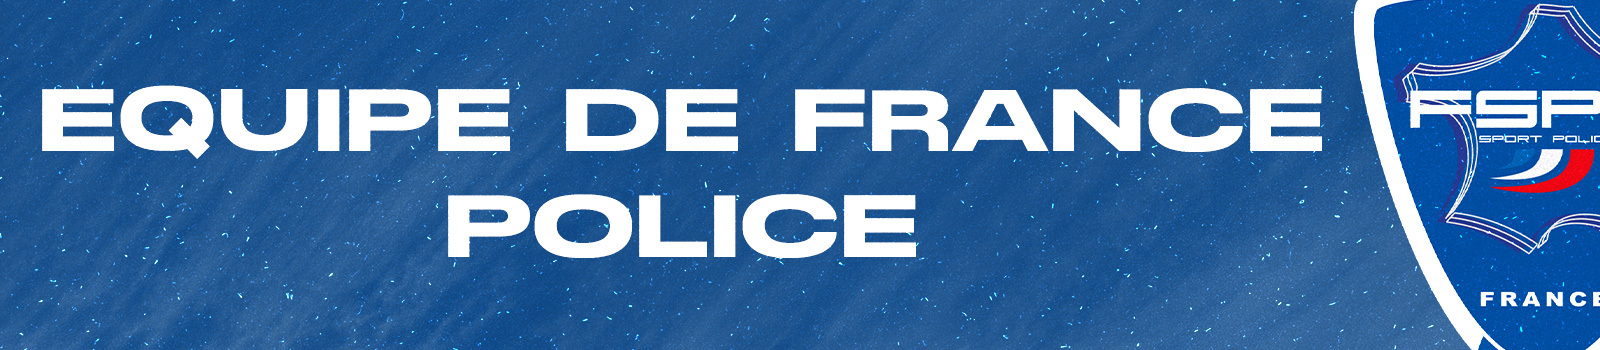 Equipe de France Police